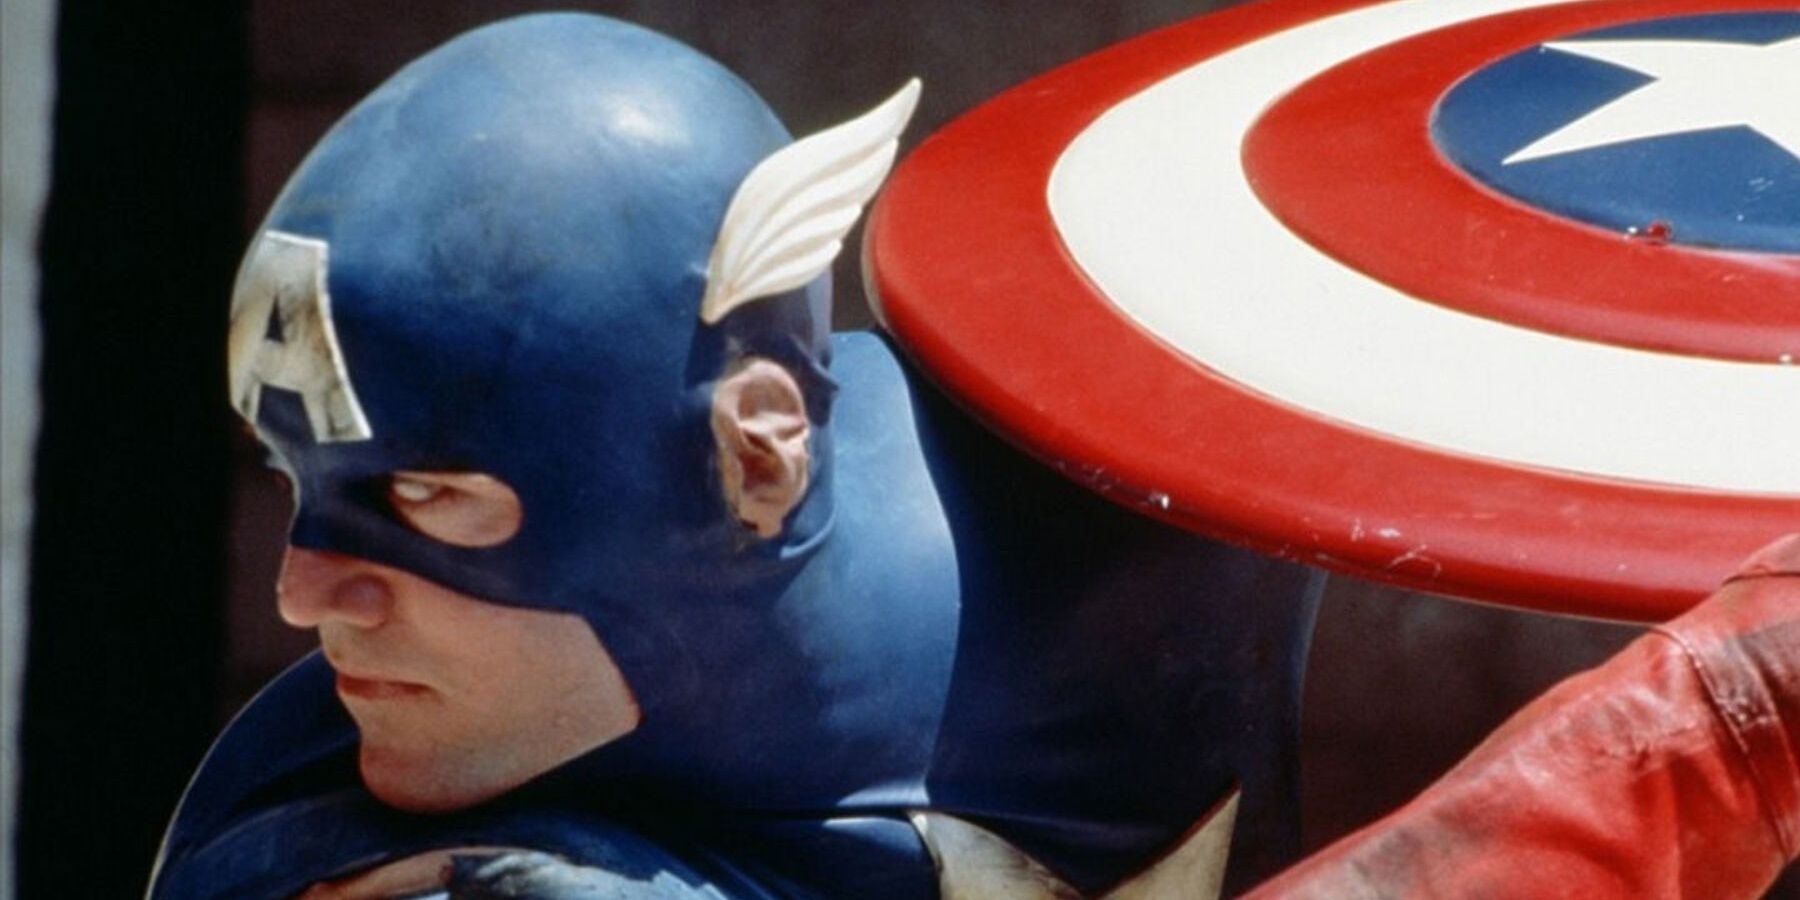 Captain America prepares to throw his shield